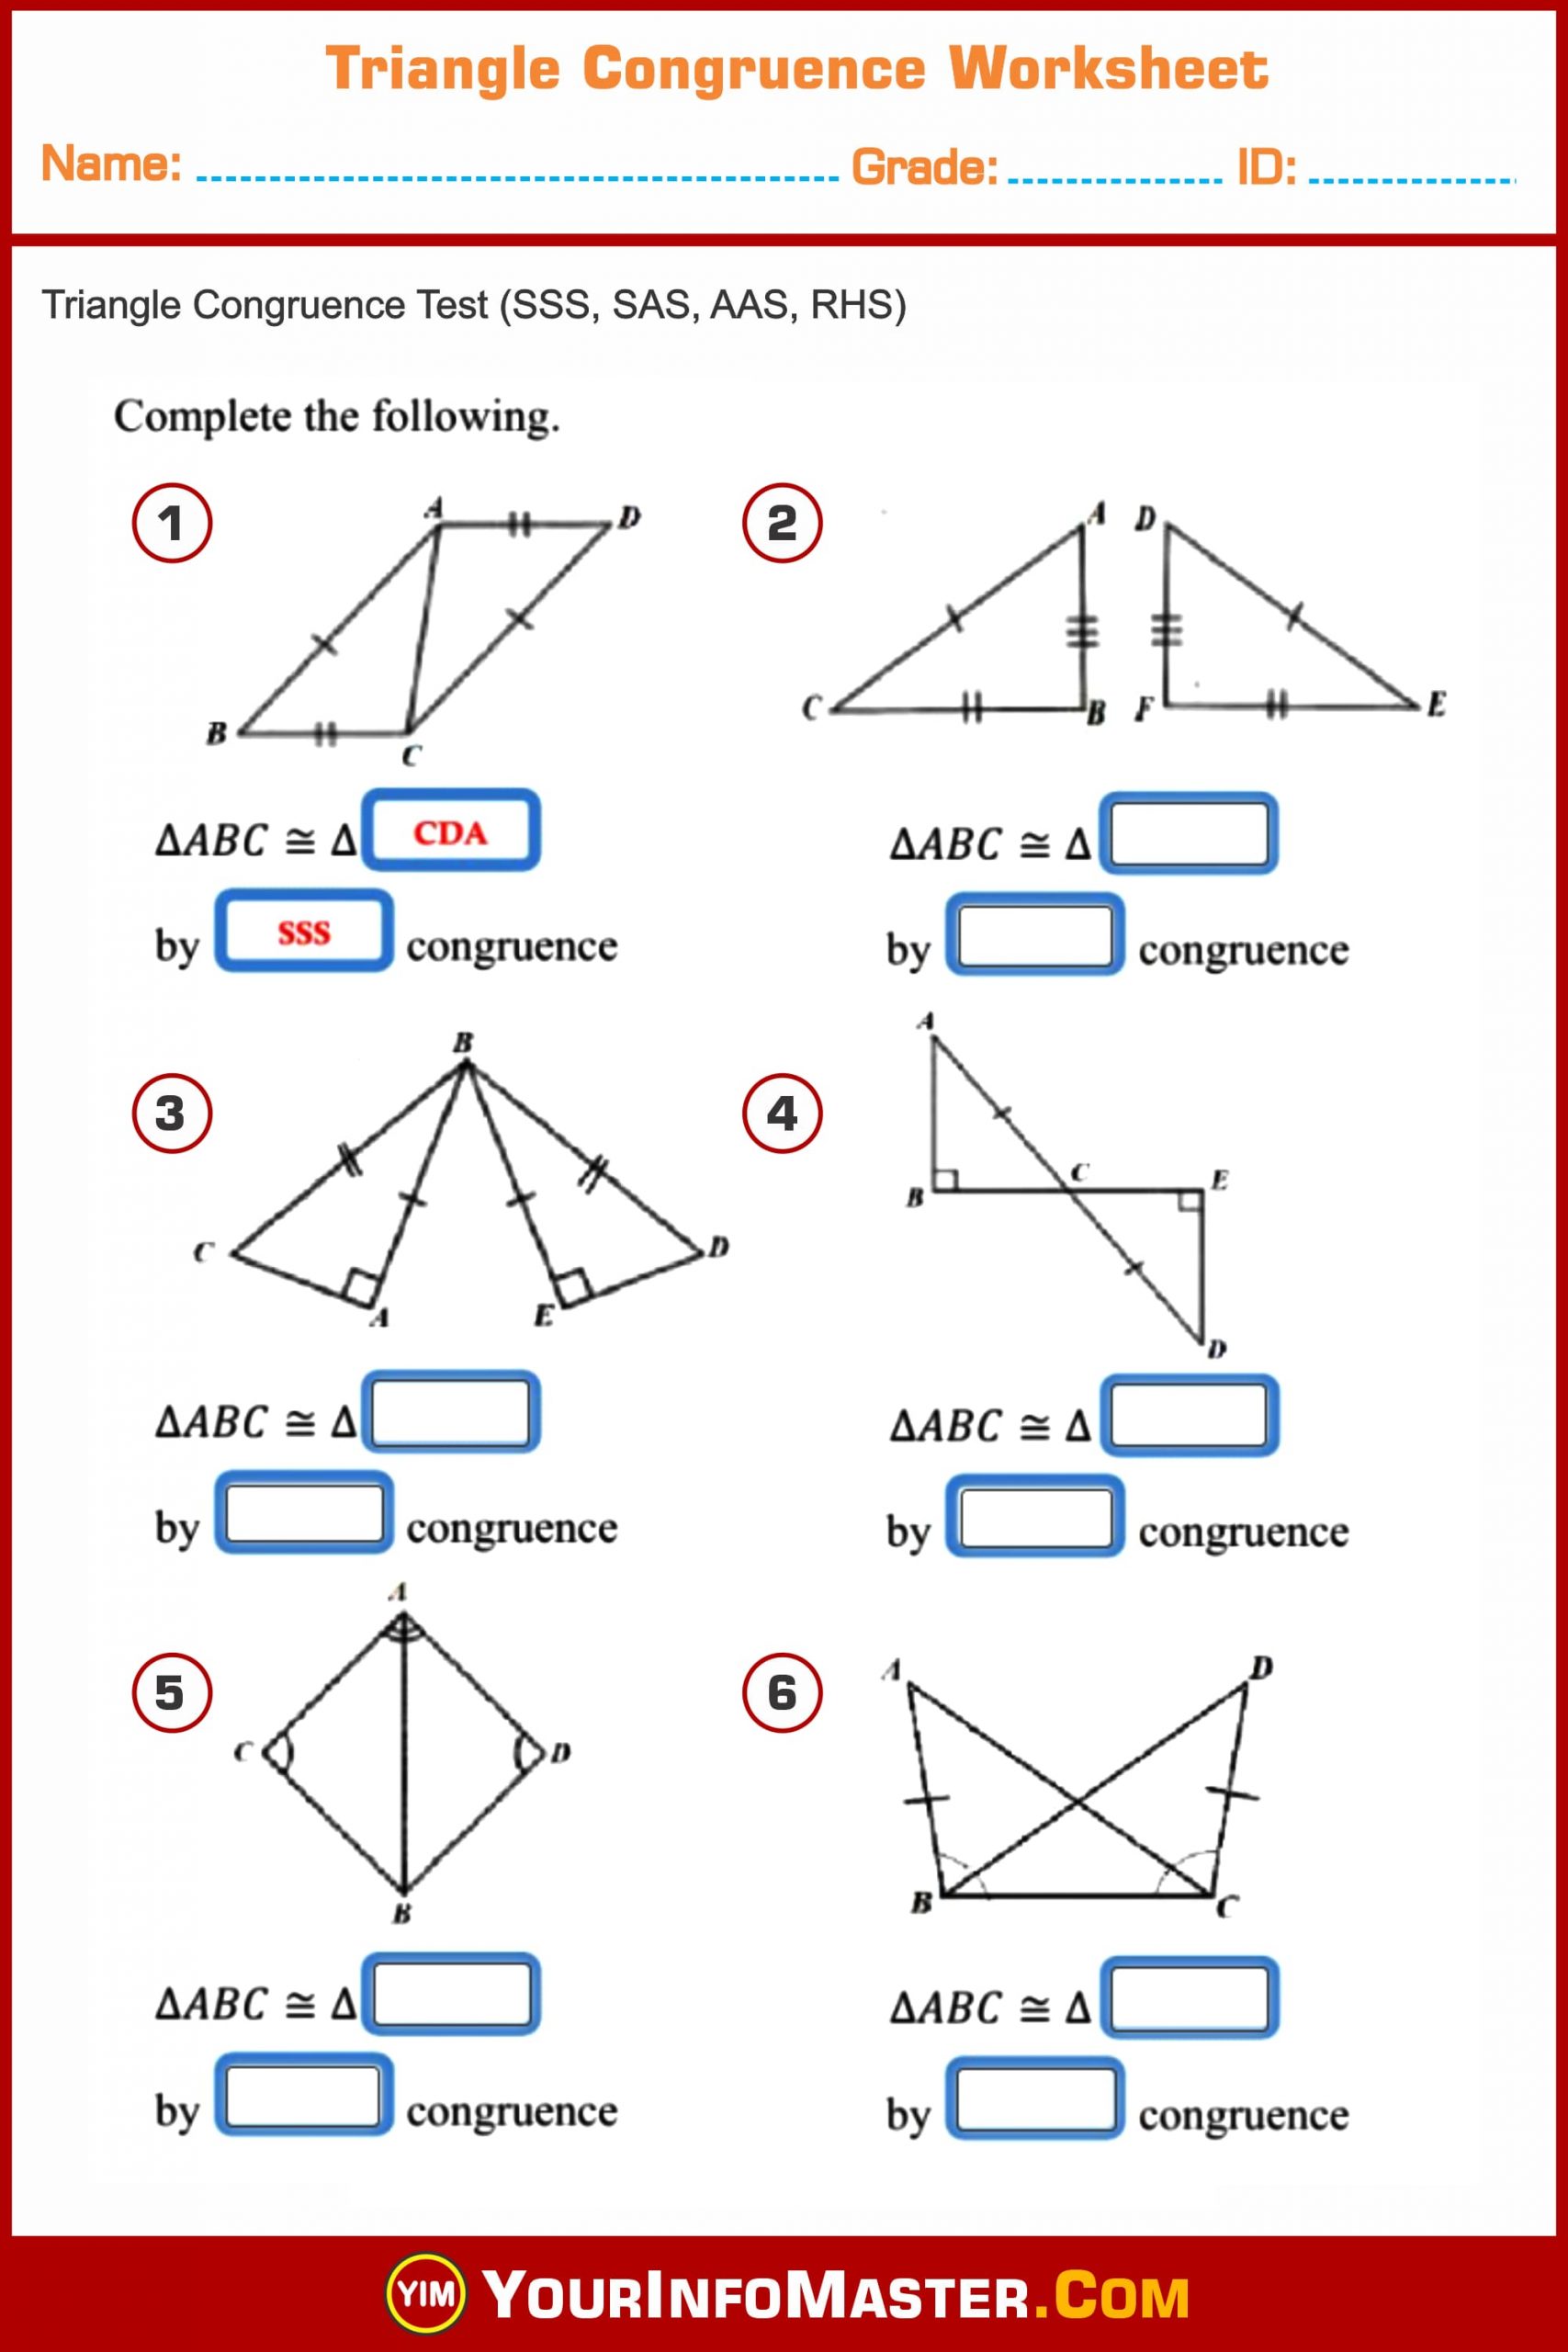 Euclidean geometry Worksheets, Free Worksheets pdf, Math Worksheets, Triangle Congruence Worksheet, Triangle Worksheet